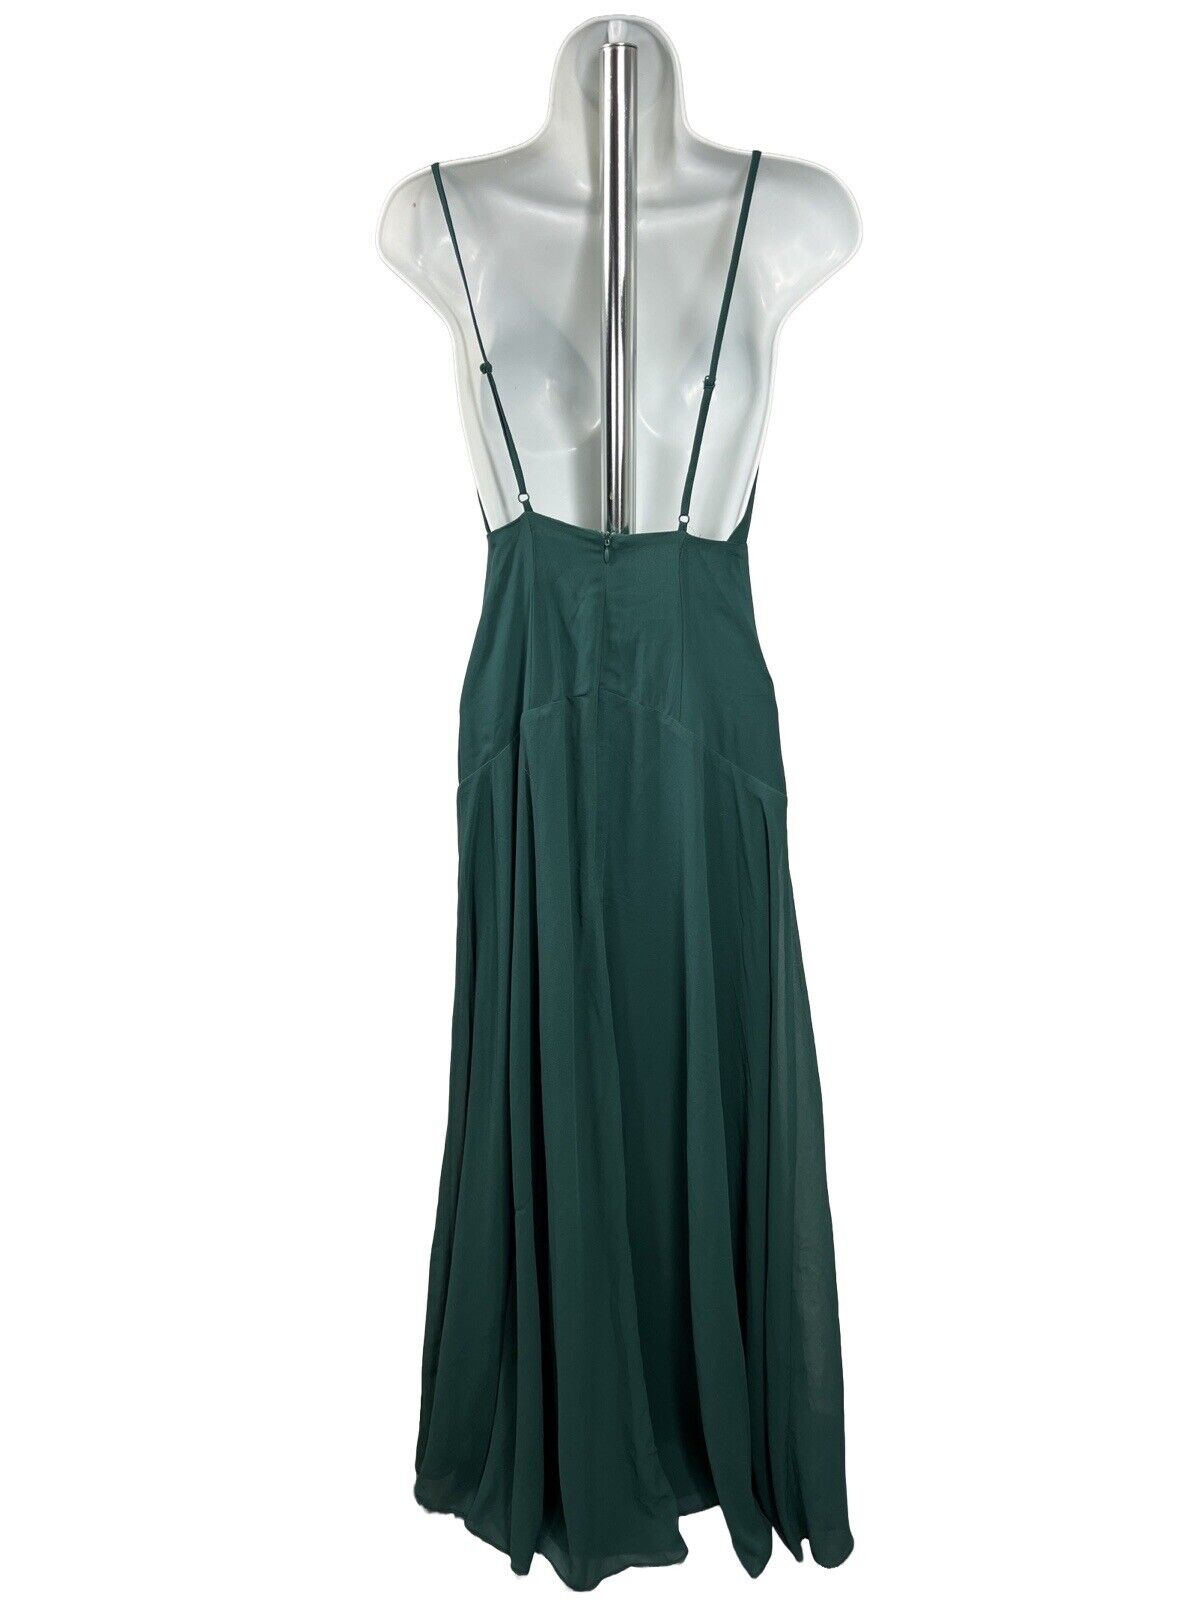 NEW Lulu's Women's Dark Green Lined Sheer Long Sleeveless Dress - XS